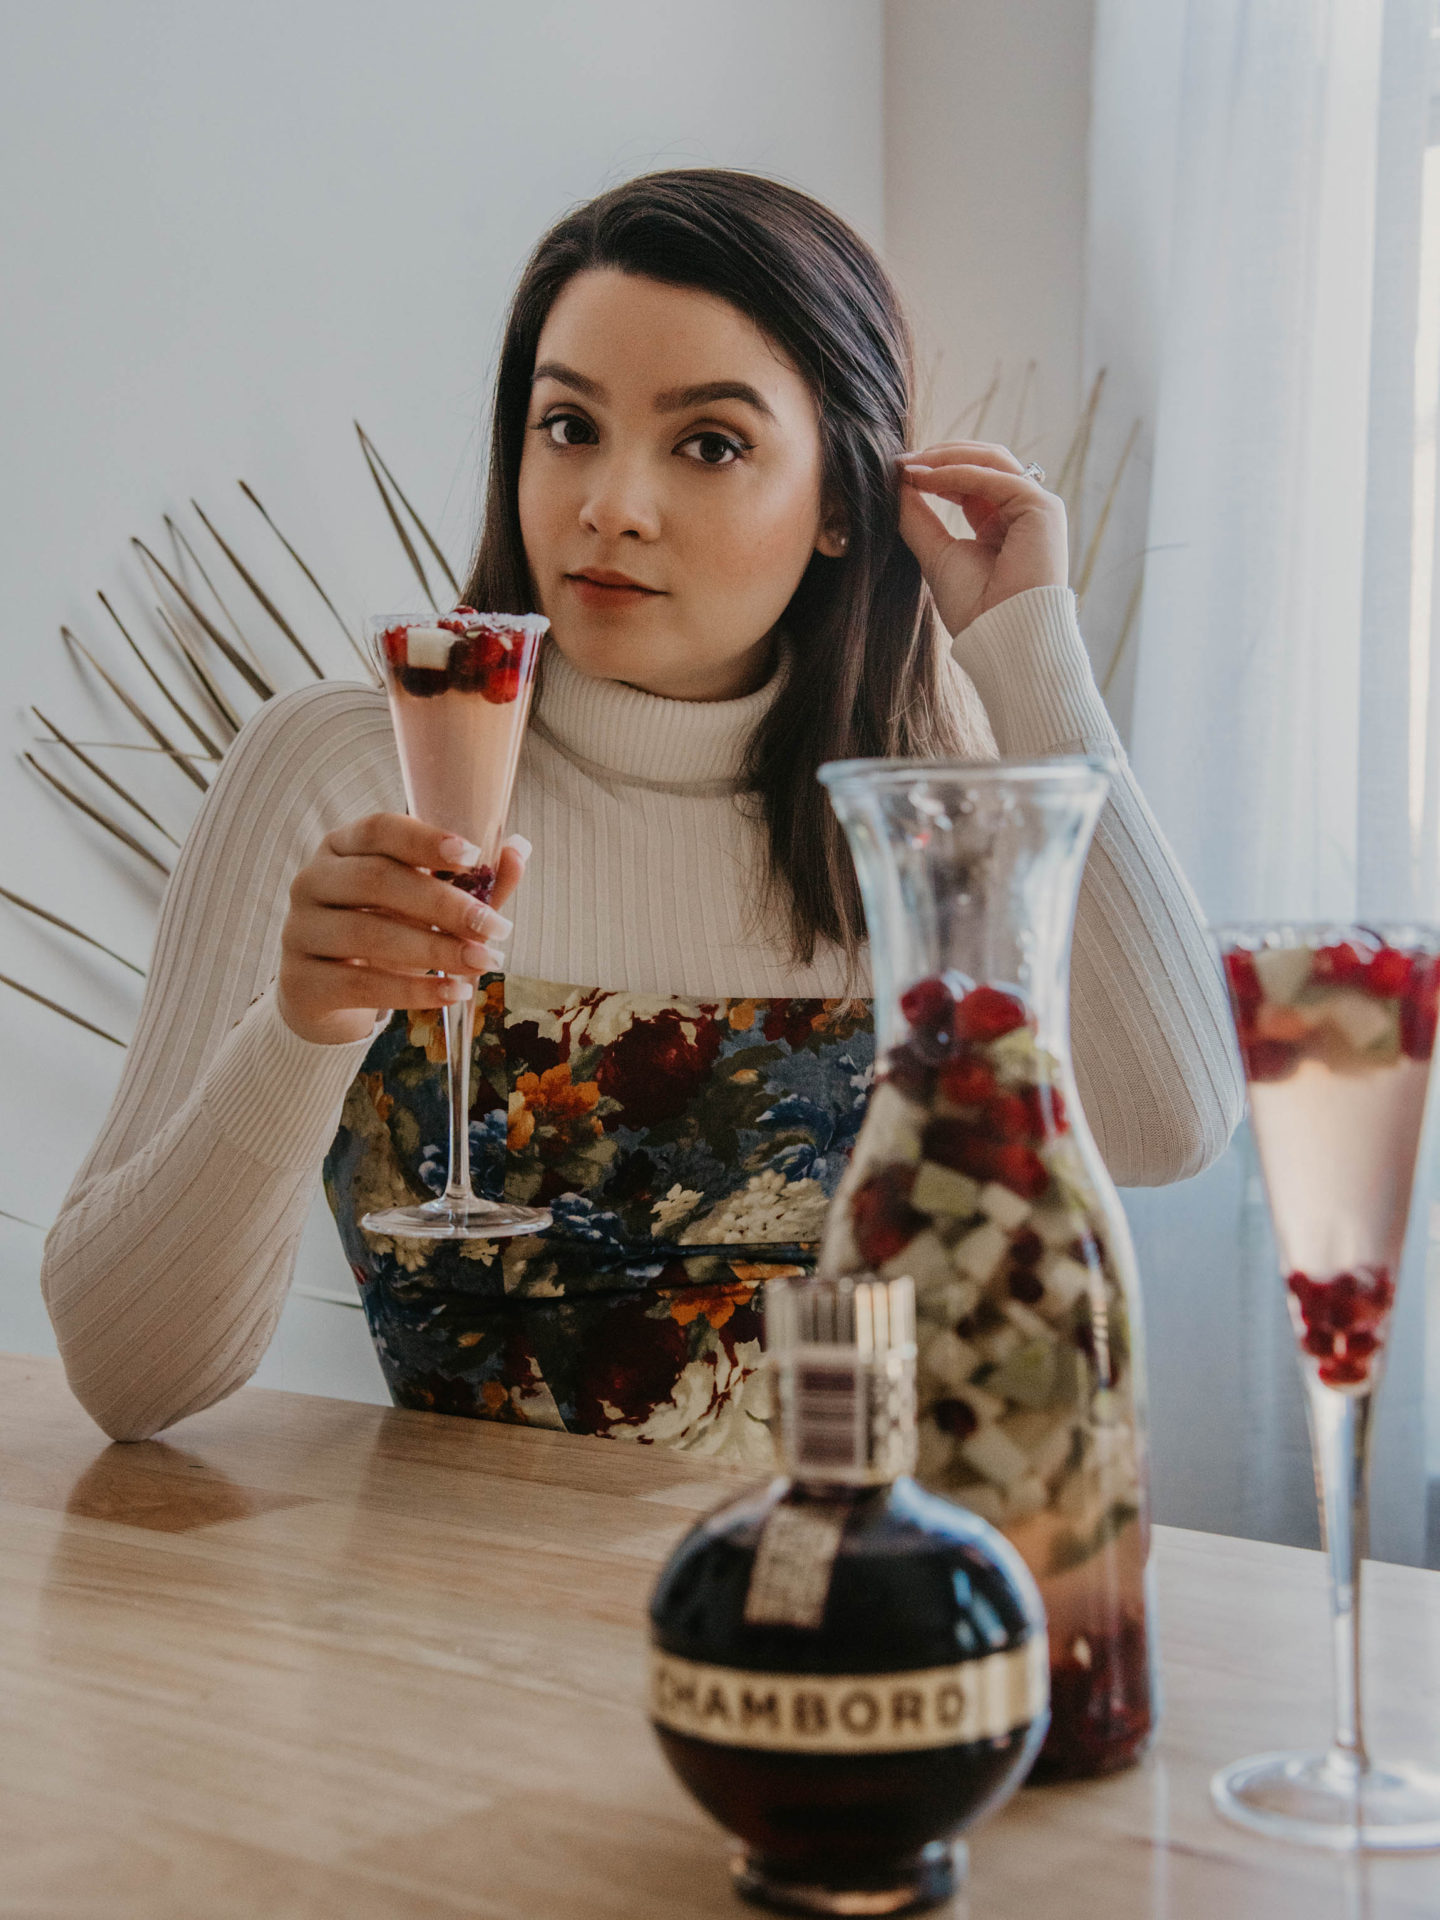 Christmas Mimosas – The Elegant Holiday Drink